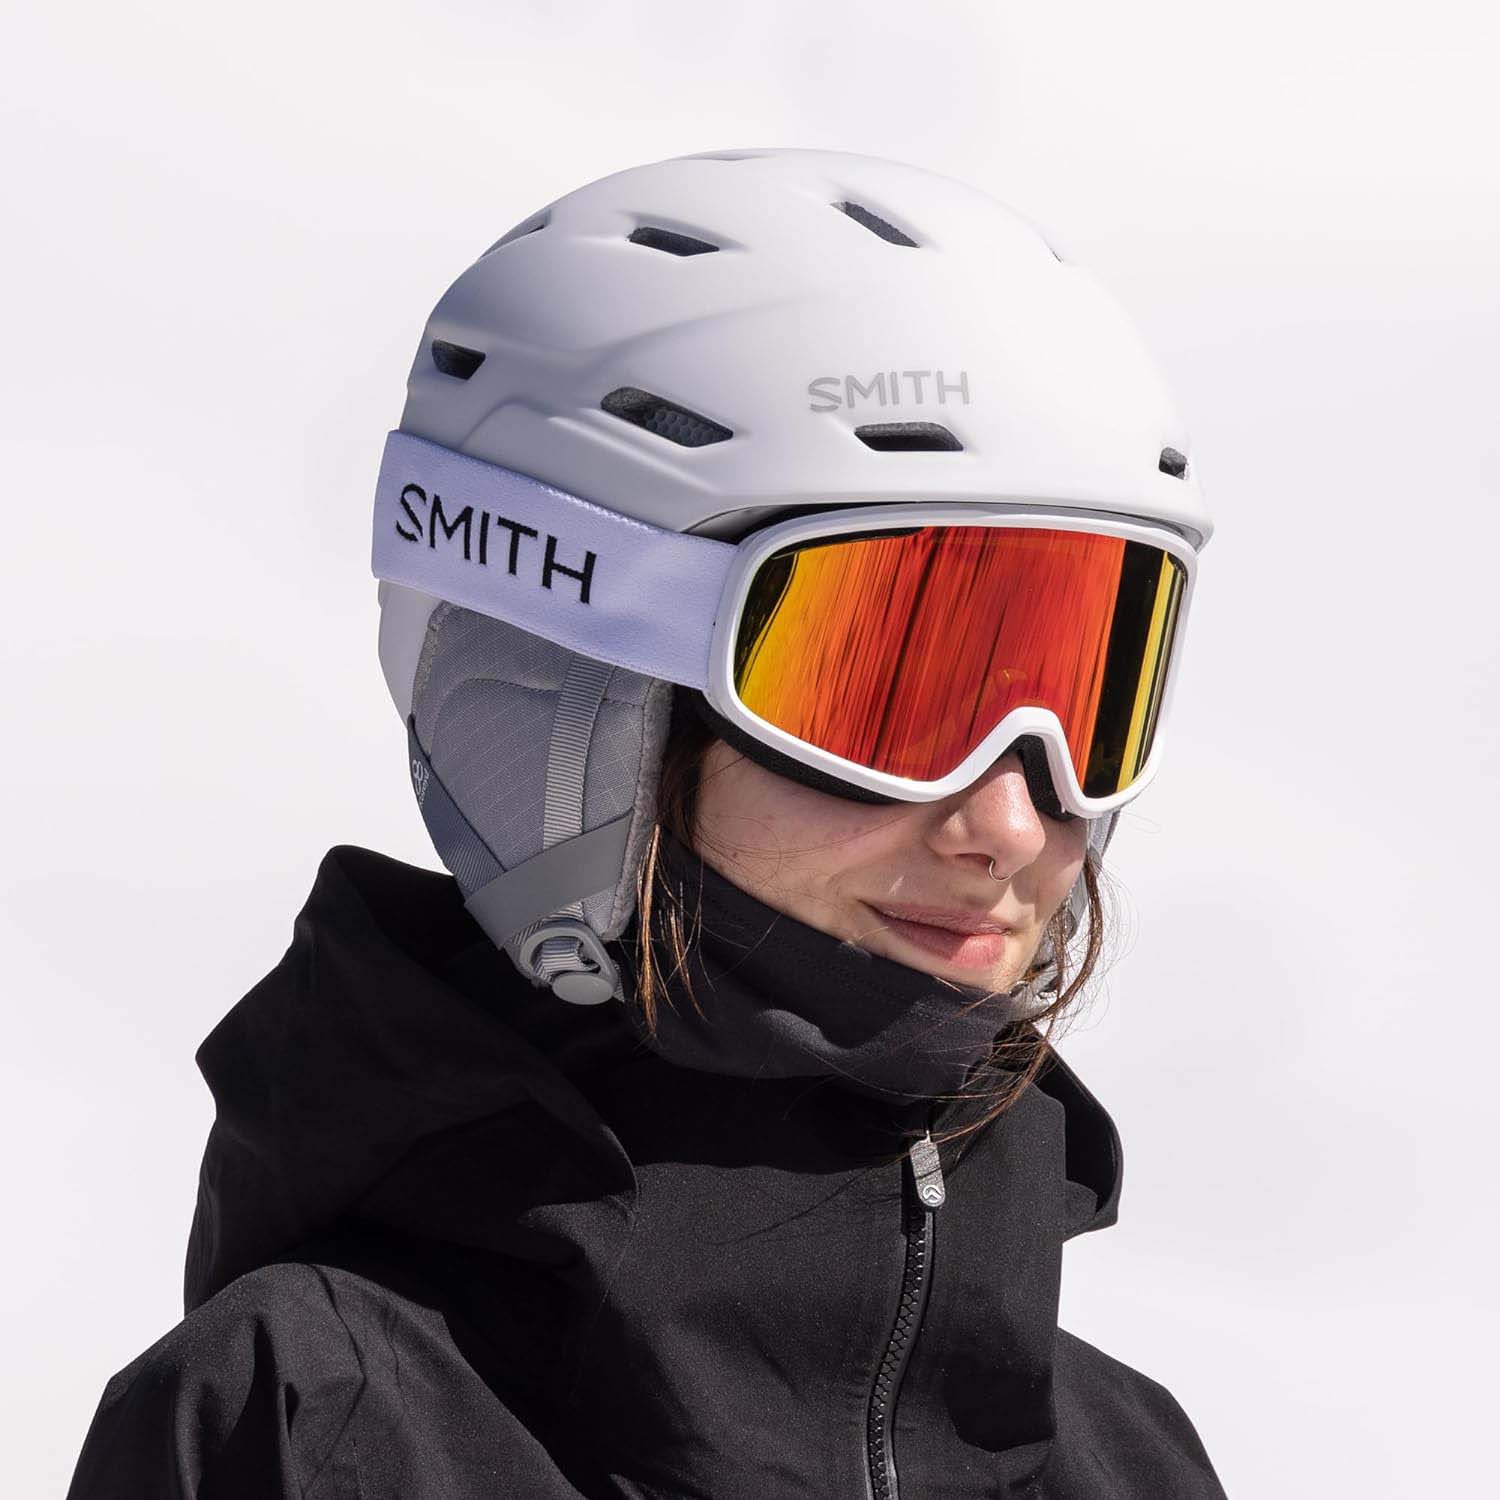 Smith Vogue Women's Snowboard/Ski Goggles